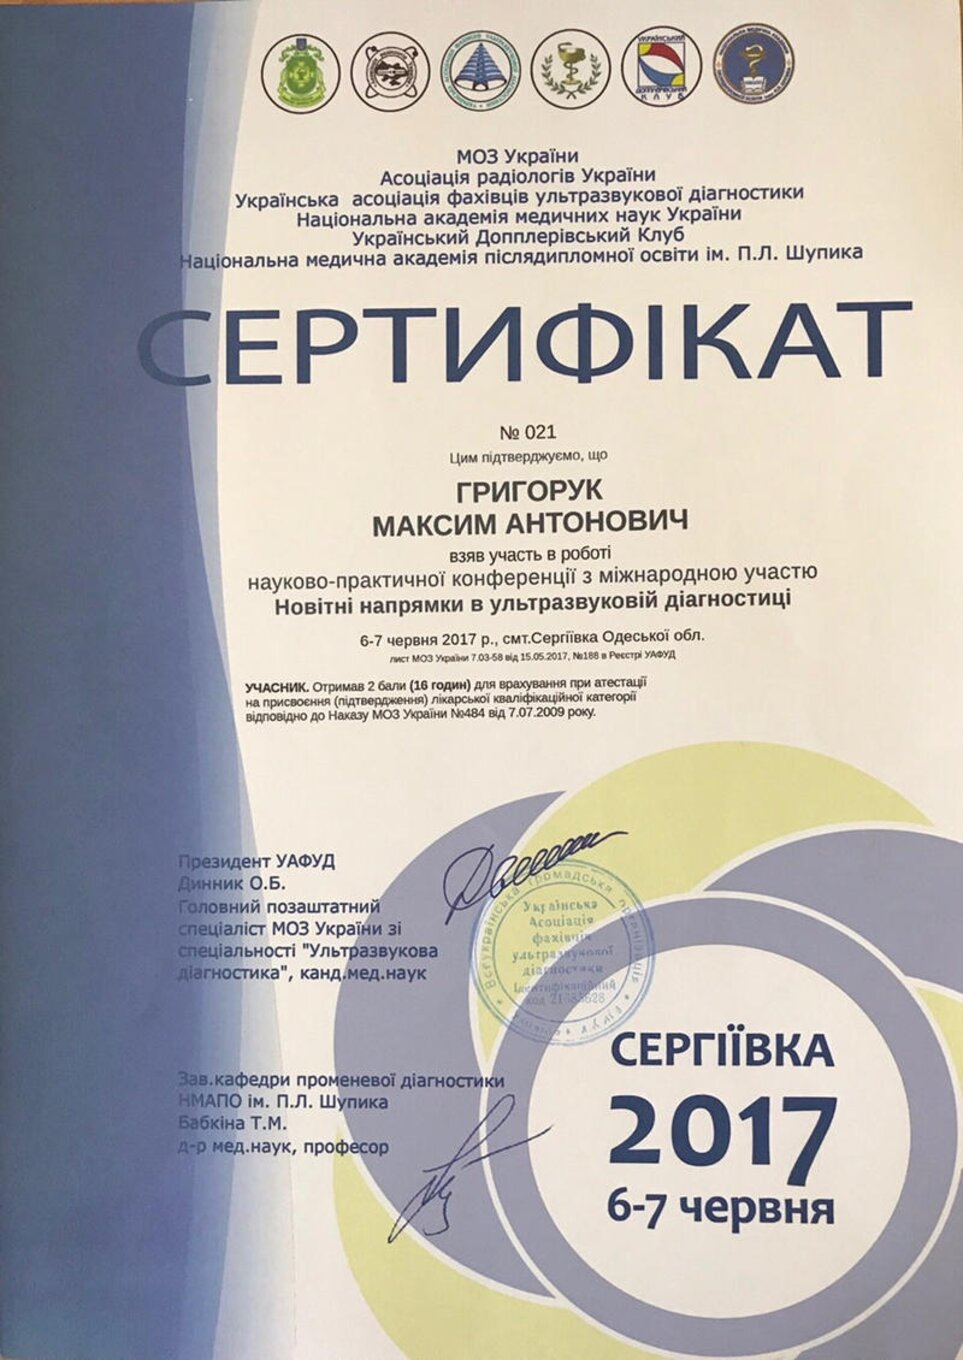 certificates/grigoruk-maksim-antonovich/hemomedika-cert-grigoruk-04.jpg